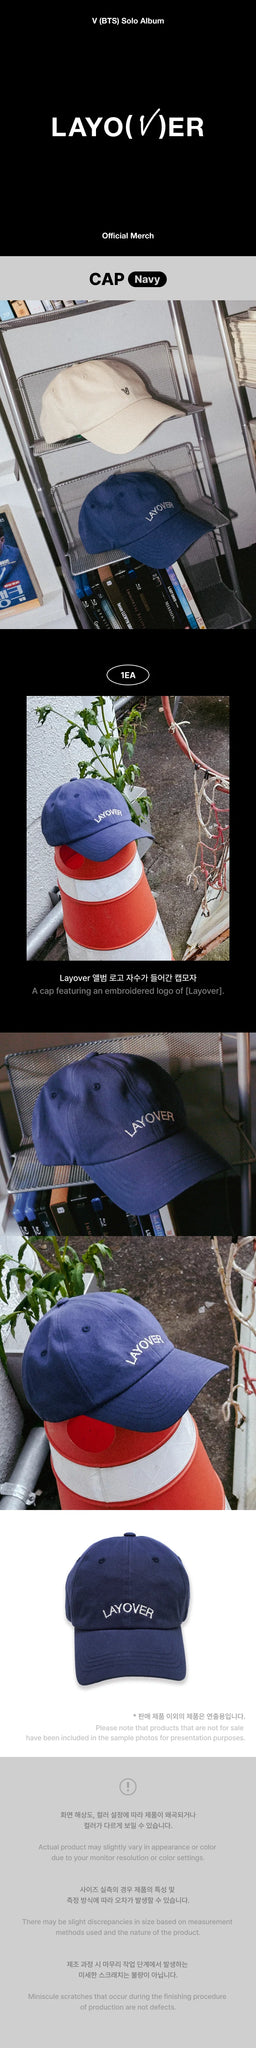 BTS V - LAYOVER 1ST SOLO ALBUM OFFICIAL CAP (Navy)